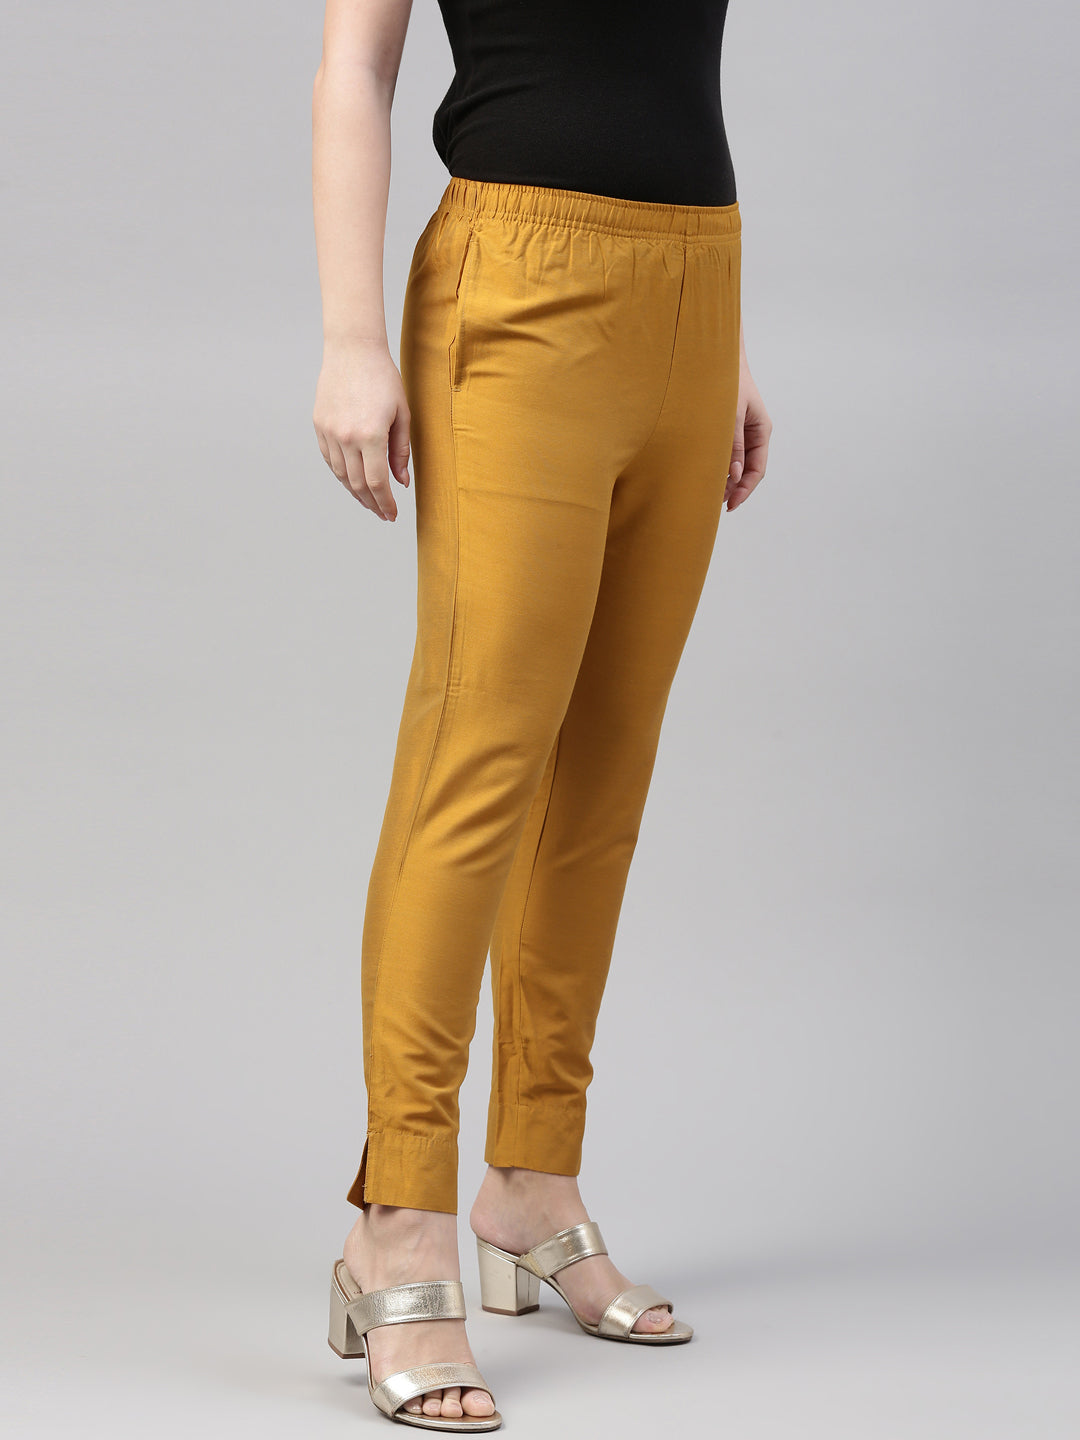 Umitay Women's Ladies Gold Velvet Trousers Straight Trousers Elastic Waist  Casual Pants sweatpants women - Walmart.com